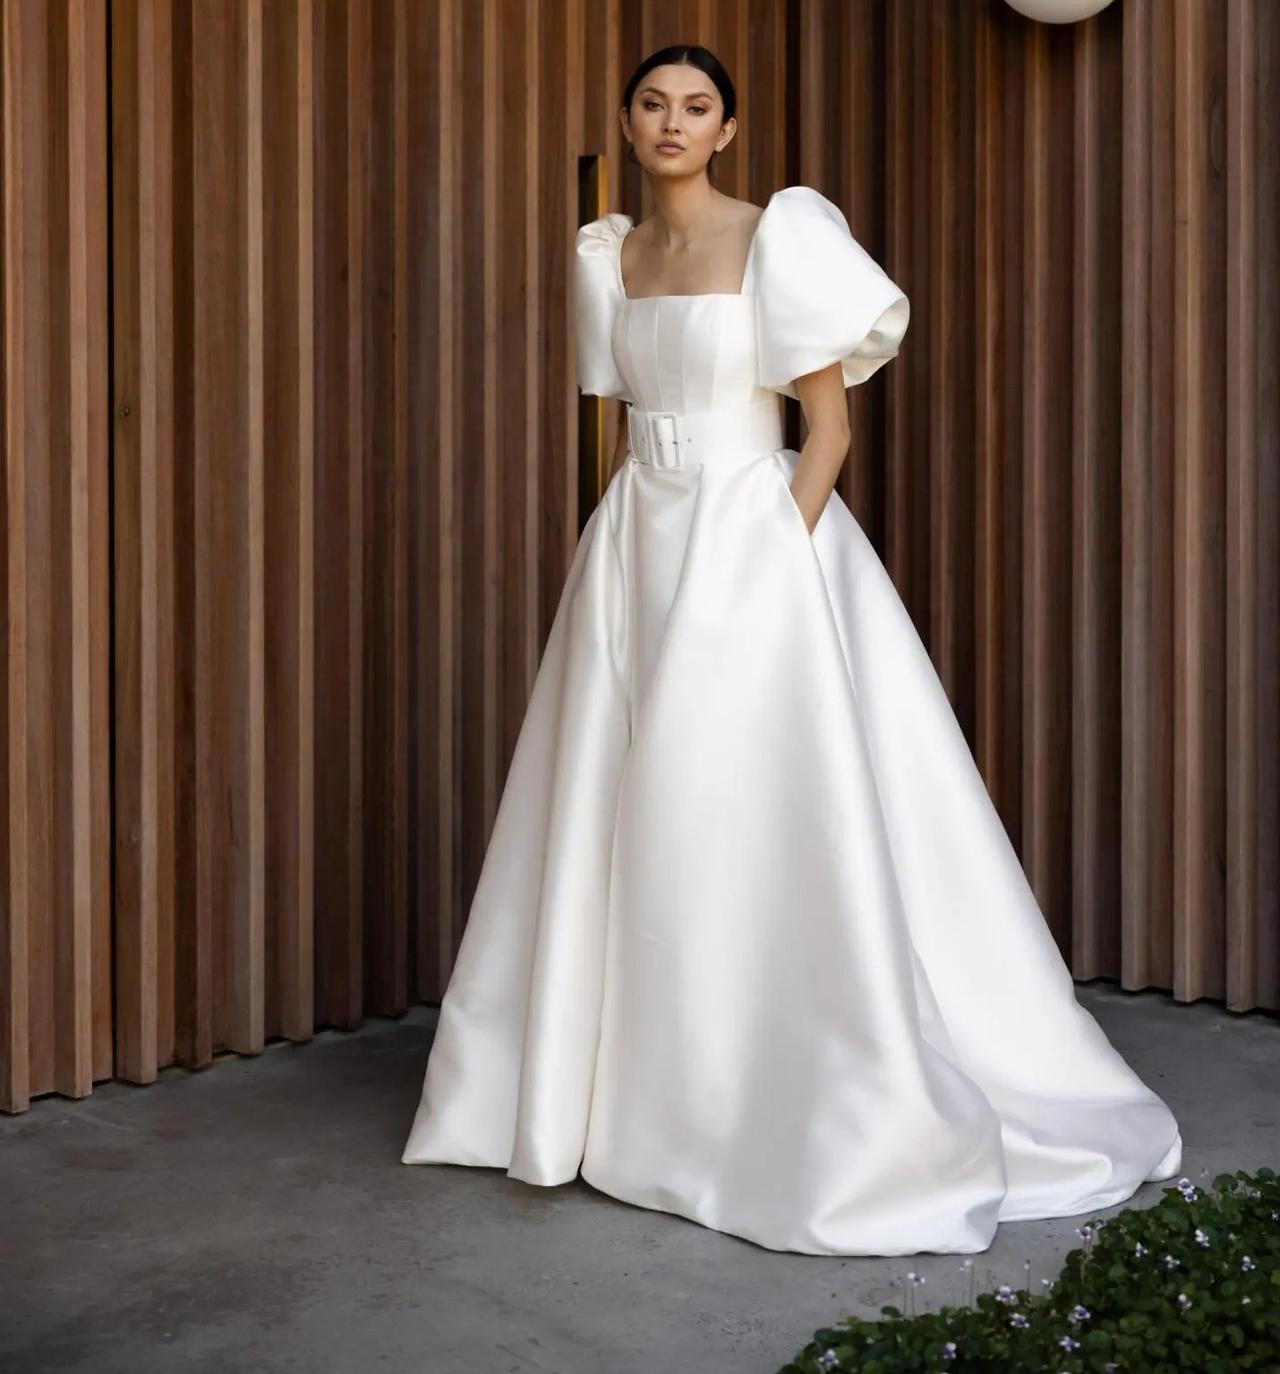 Model wearing a dramatic puff sleeve wedding dress